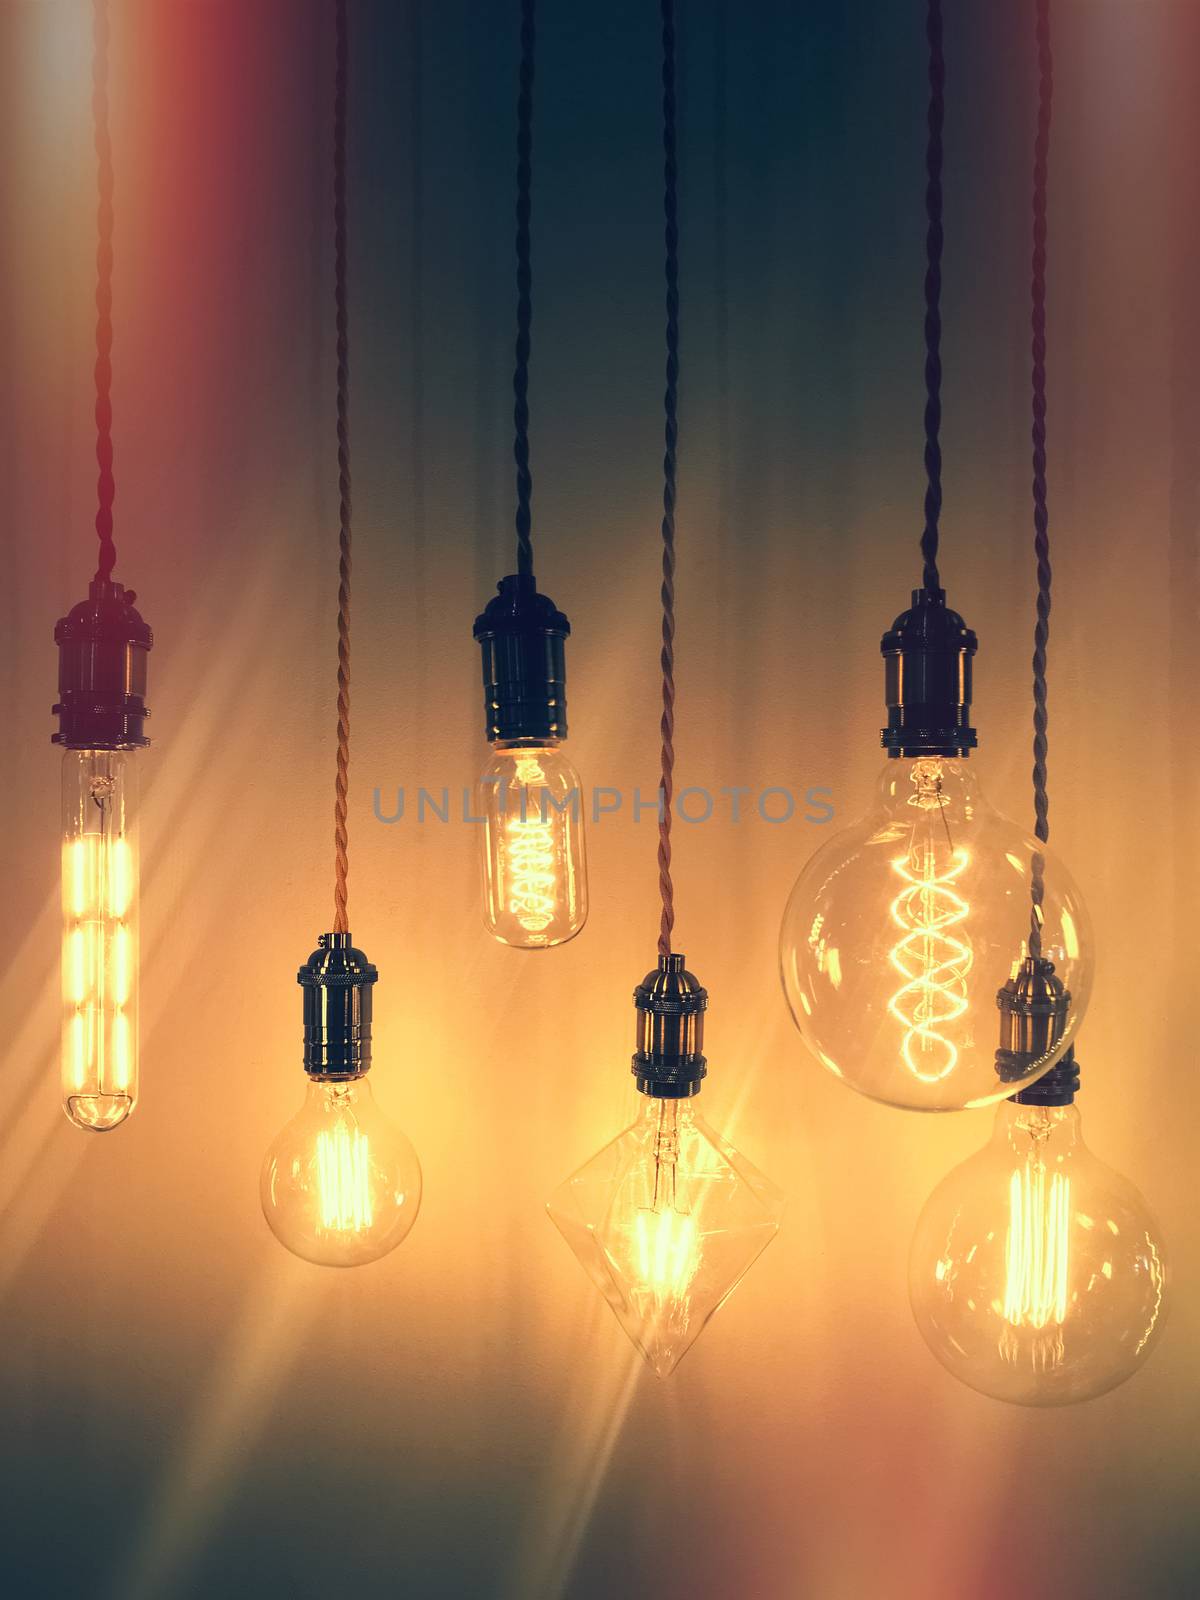 Retro style image of industrial light bulbs by anikasalsera